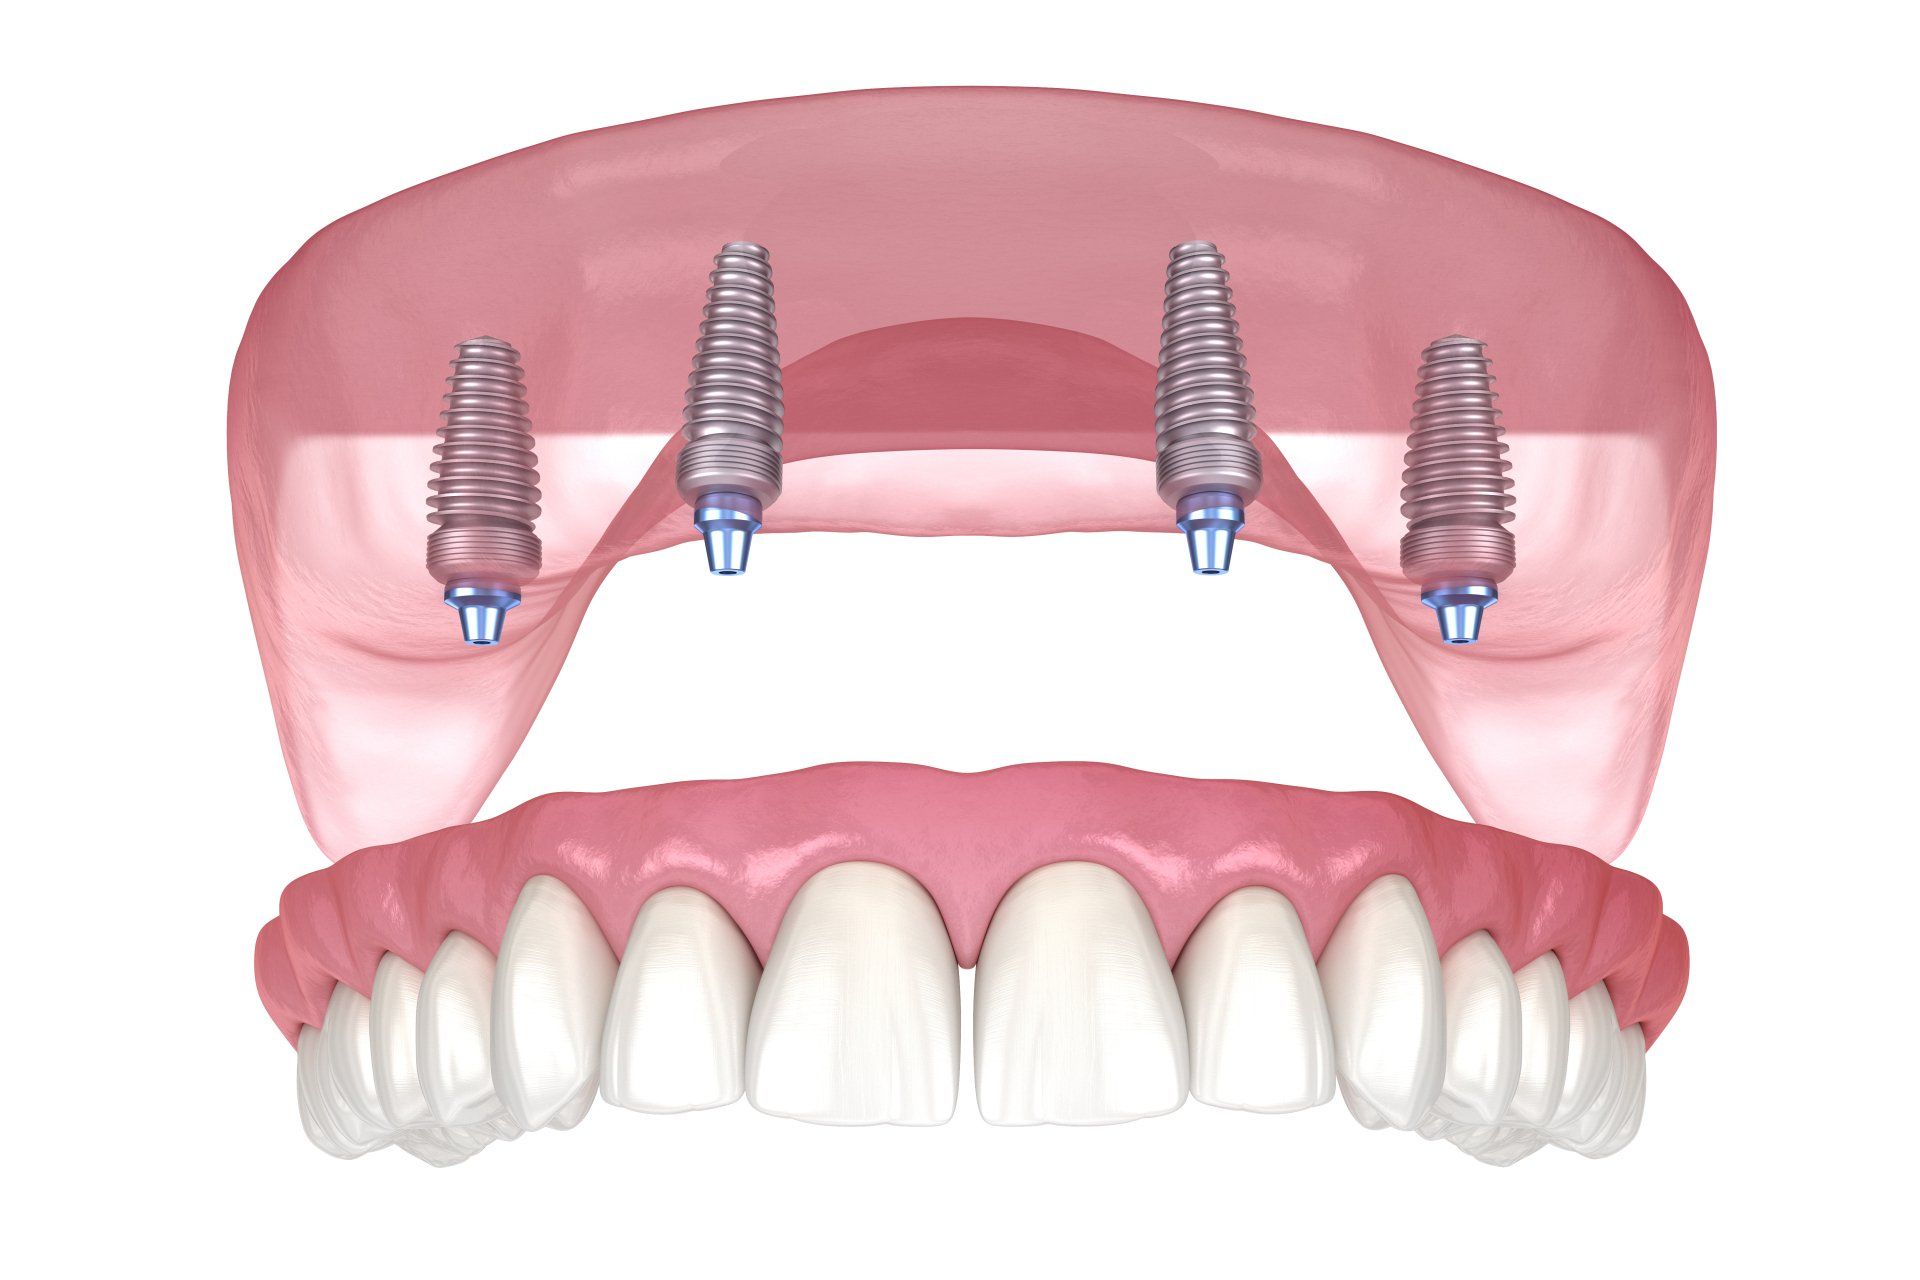 model of permanent dentures on 4 implants